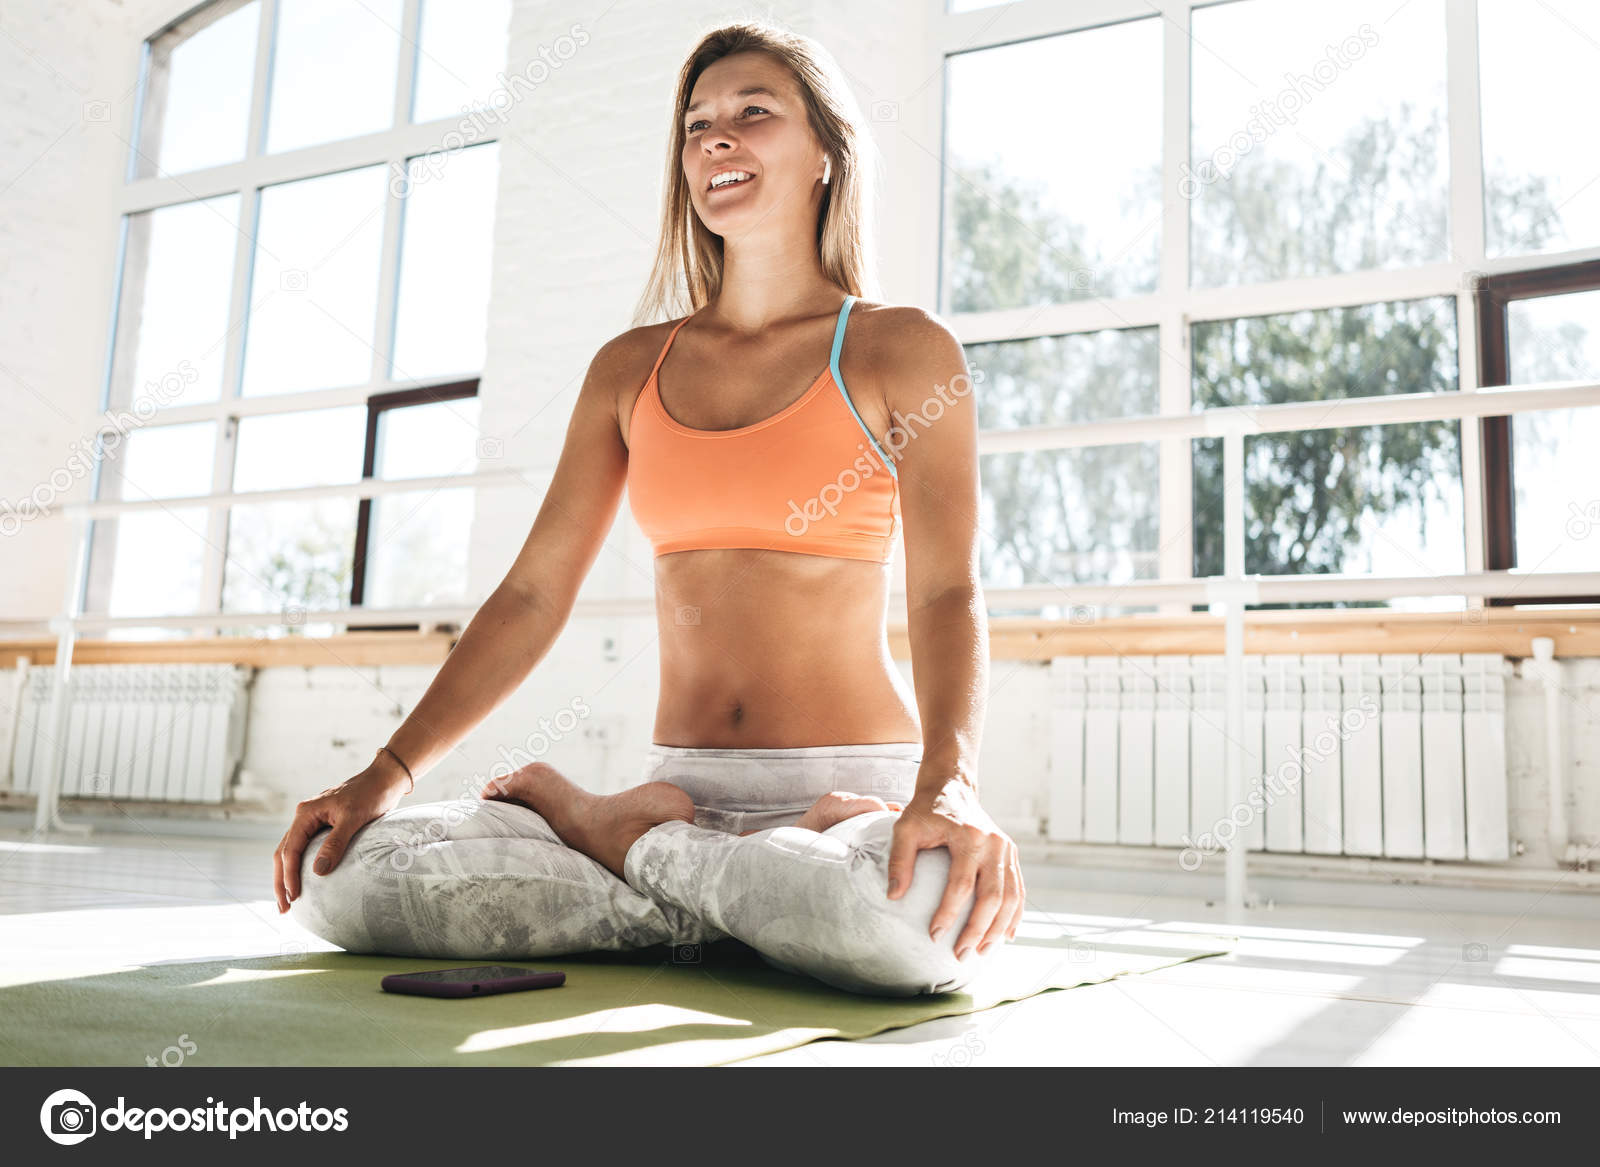 https://st4.depositphotos.com/12531278/21411/i/1600/depositphotos_214119540-stock-photo-happines-fit-woman-practicing-yoga.jpg